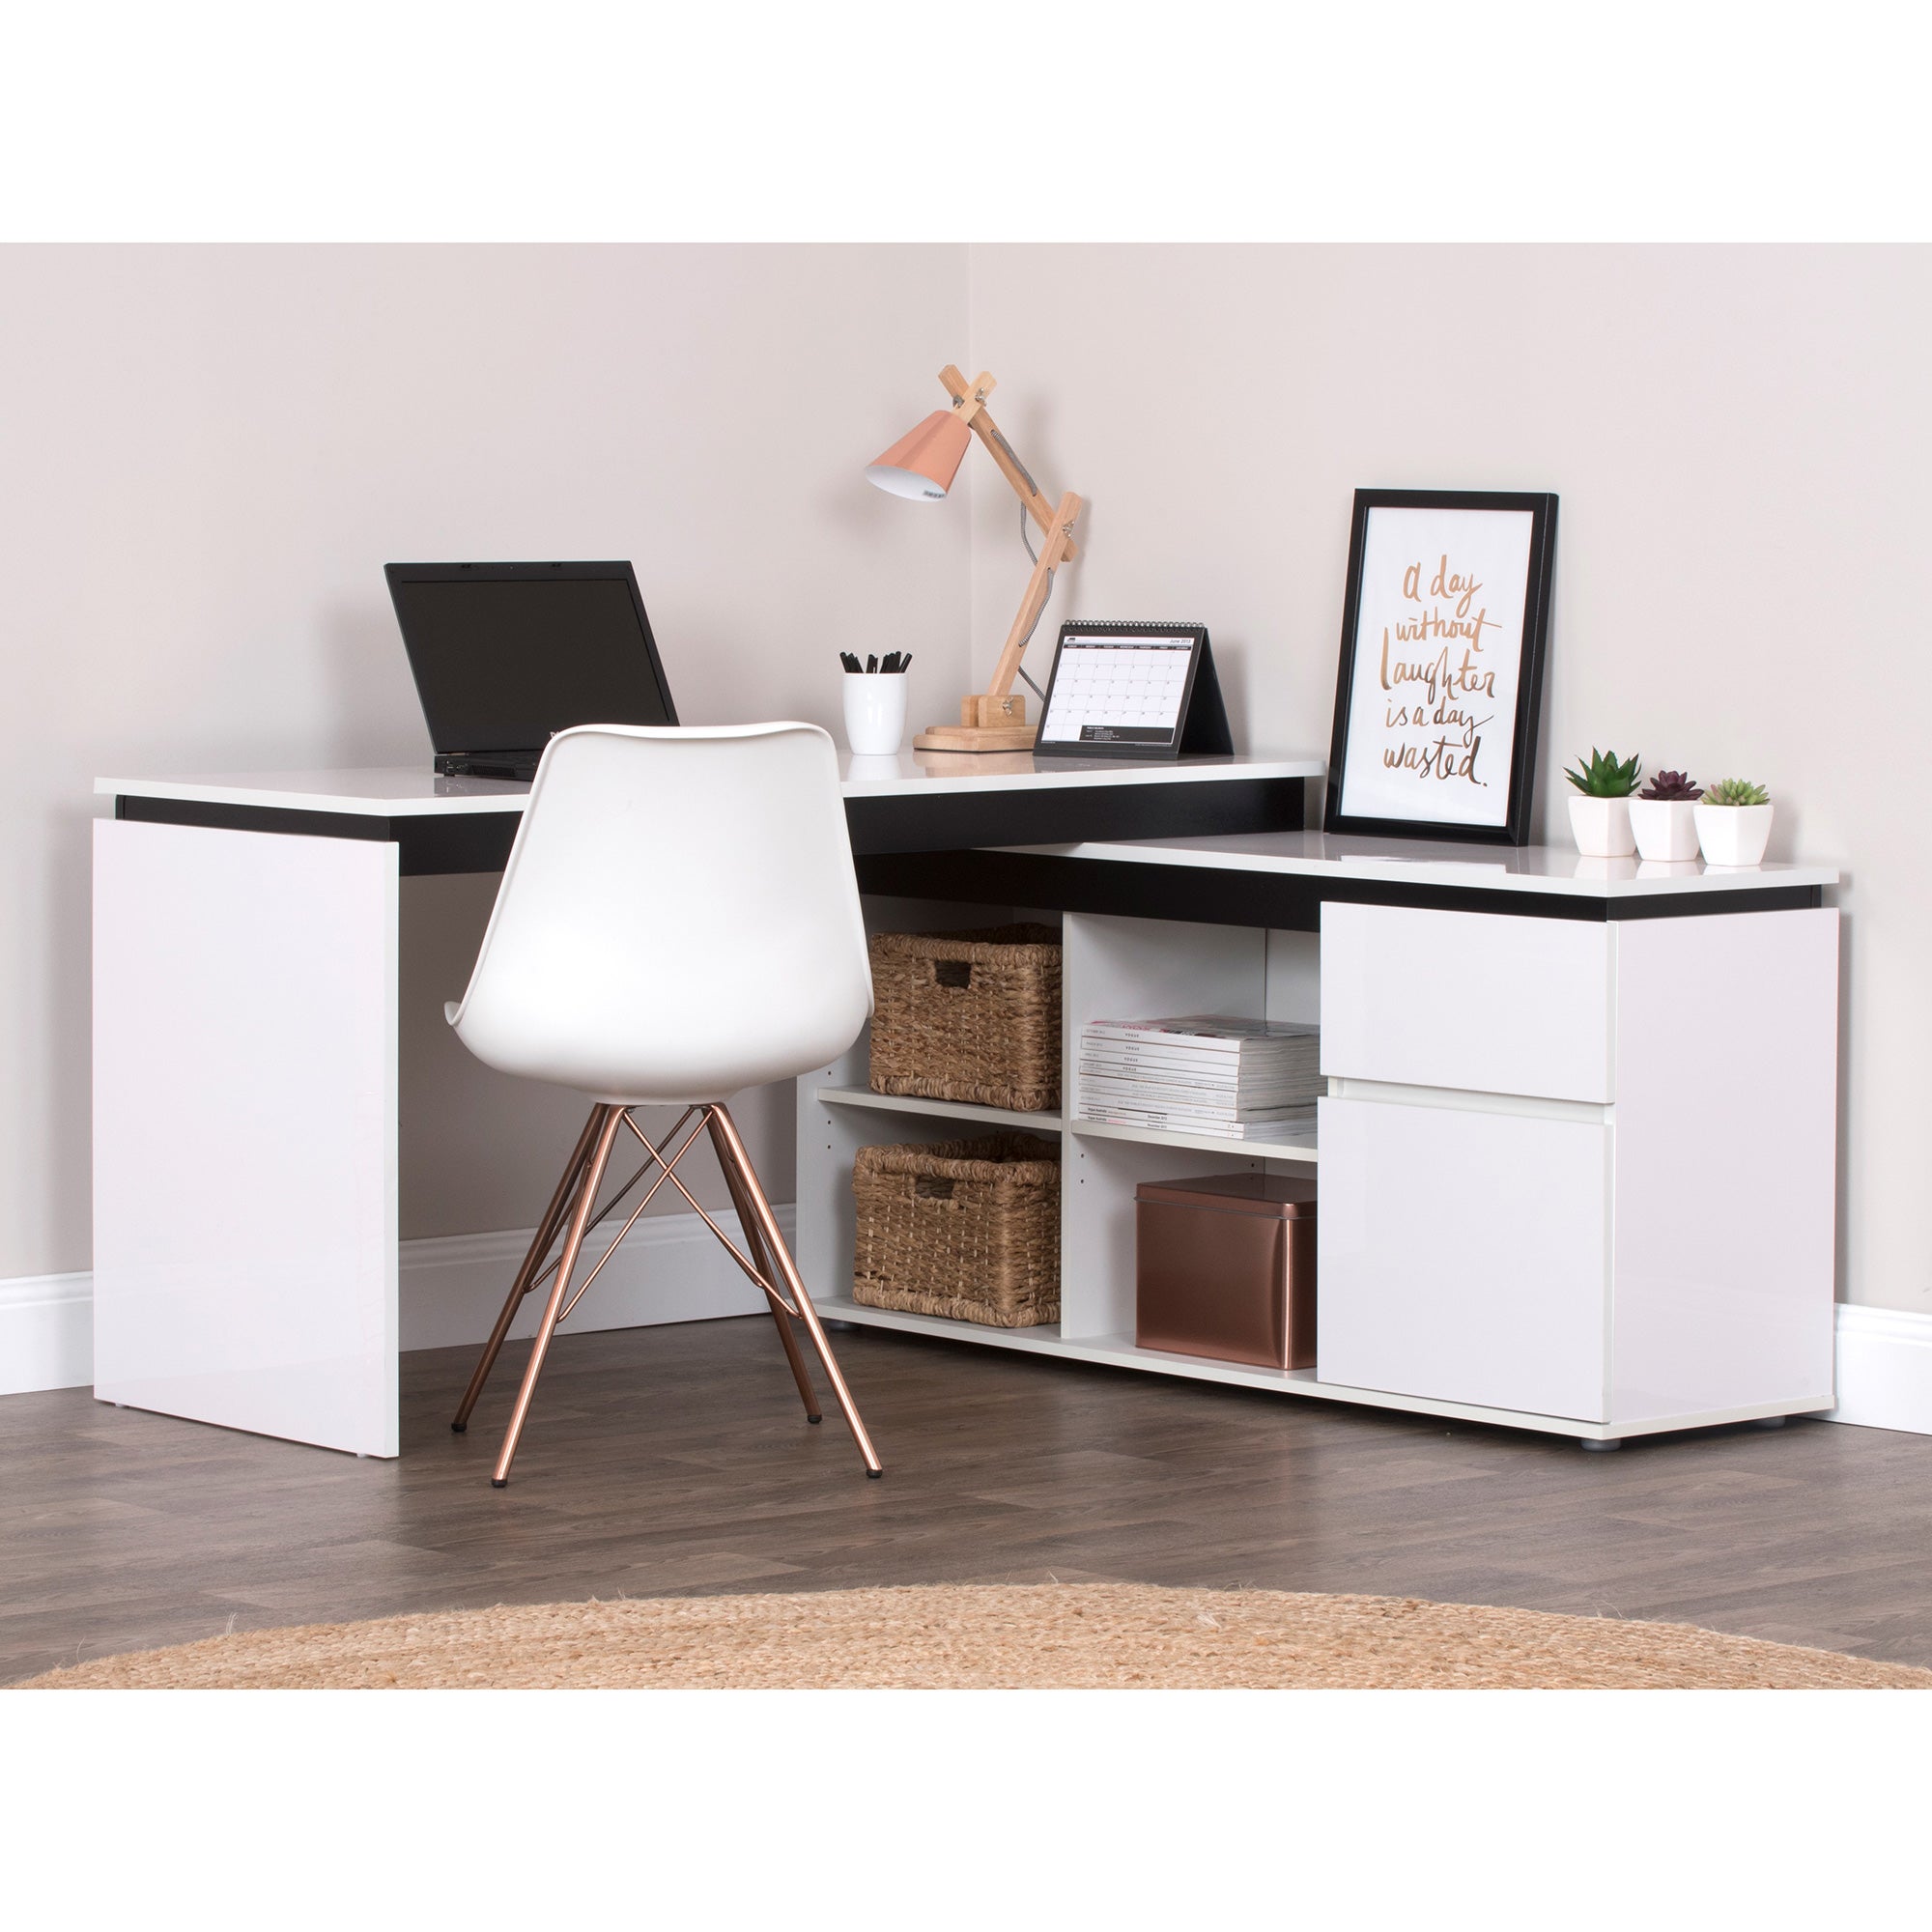 Milano High Gloss Executive Desk w/ Drawers - White